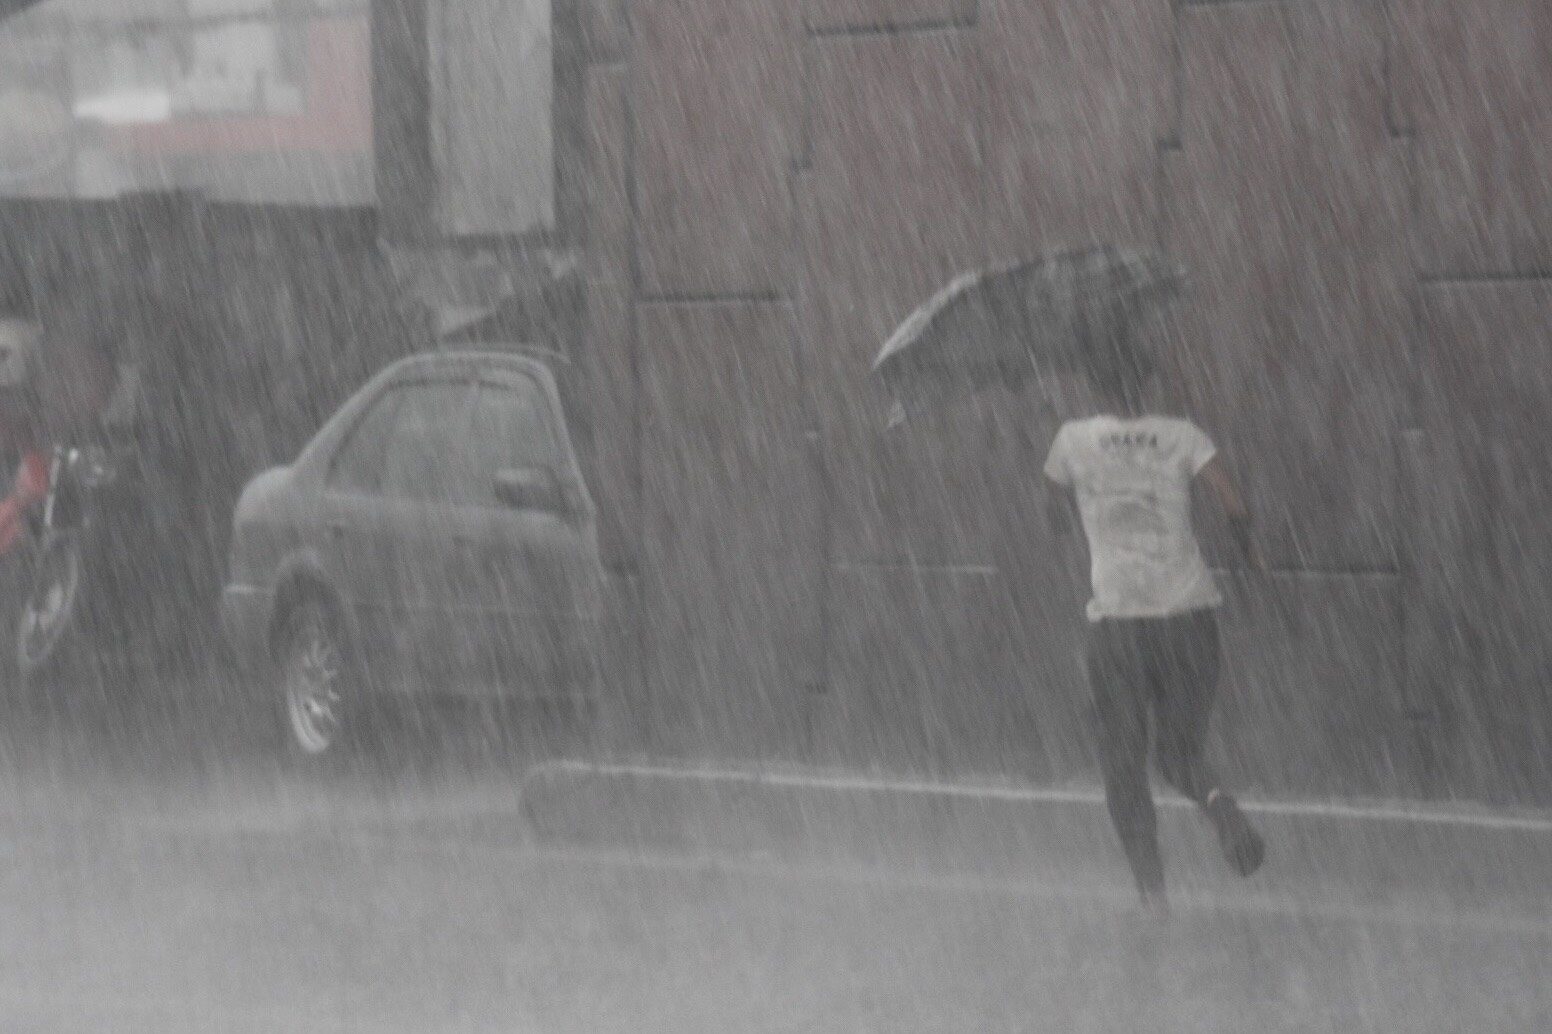 PAGASA: Rainy season begins in the Philippines